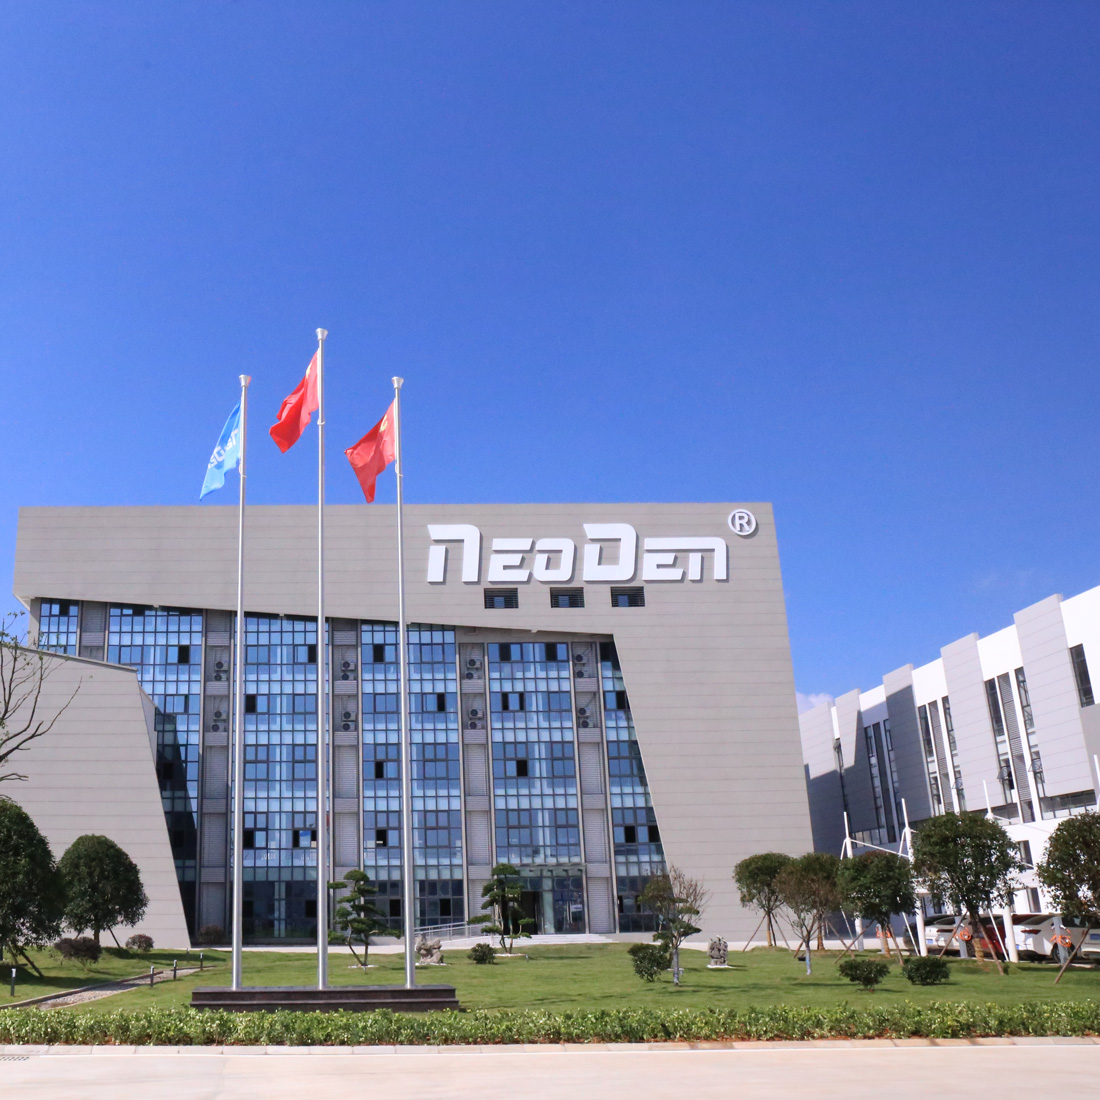 Wikipedia—NeoDen တွင် စာရင်းသွင်းရမည့် တစ်ခုတည်းသော တရုတ်ပြည်မကြီး SMT အမှတ်တံဆိပ်။